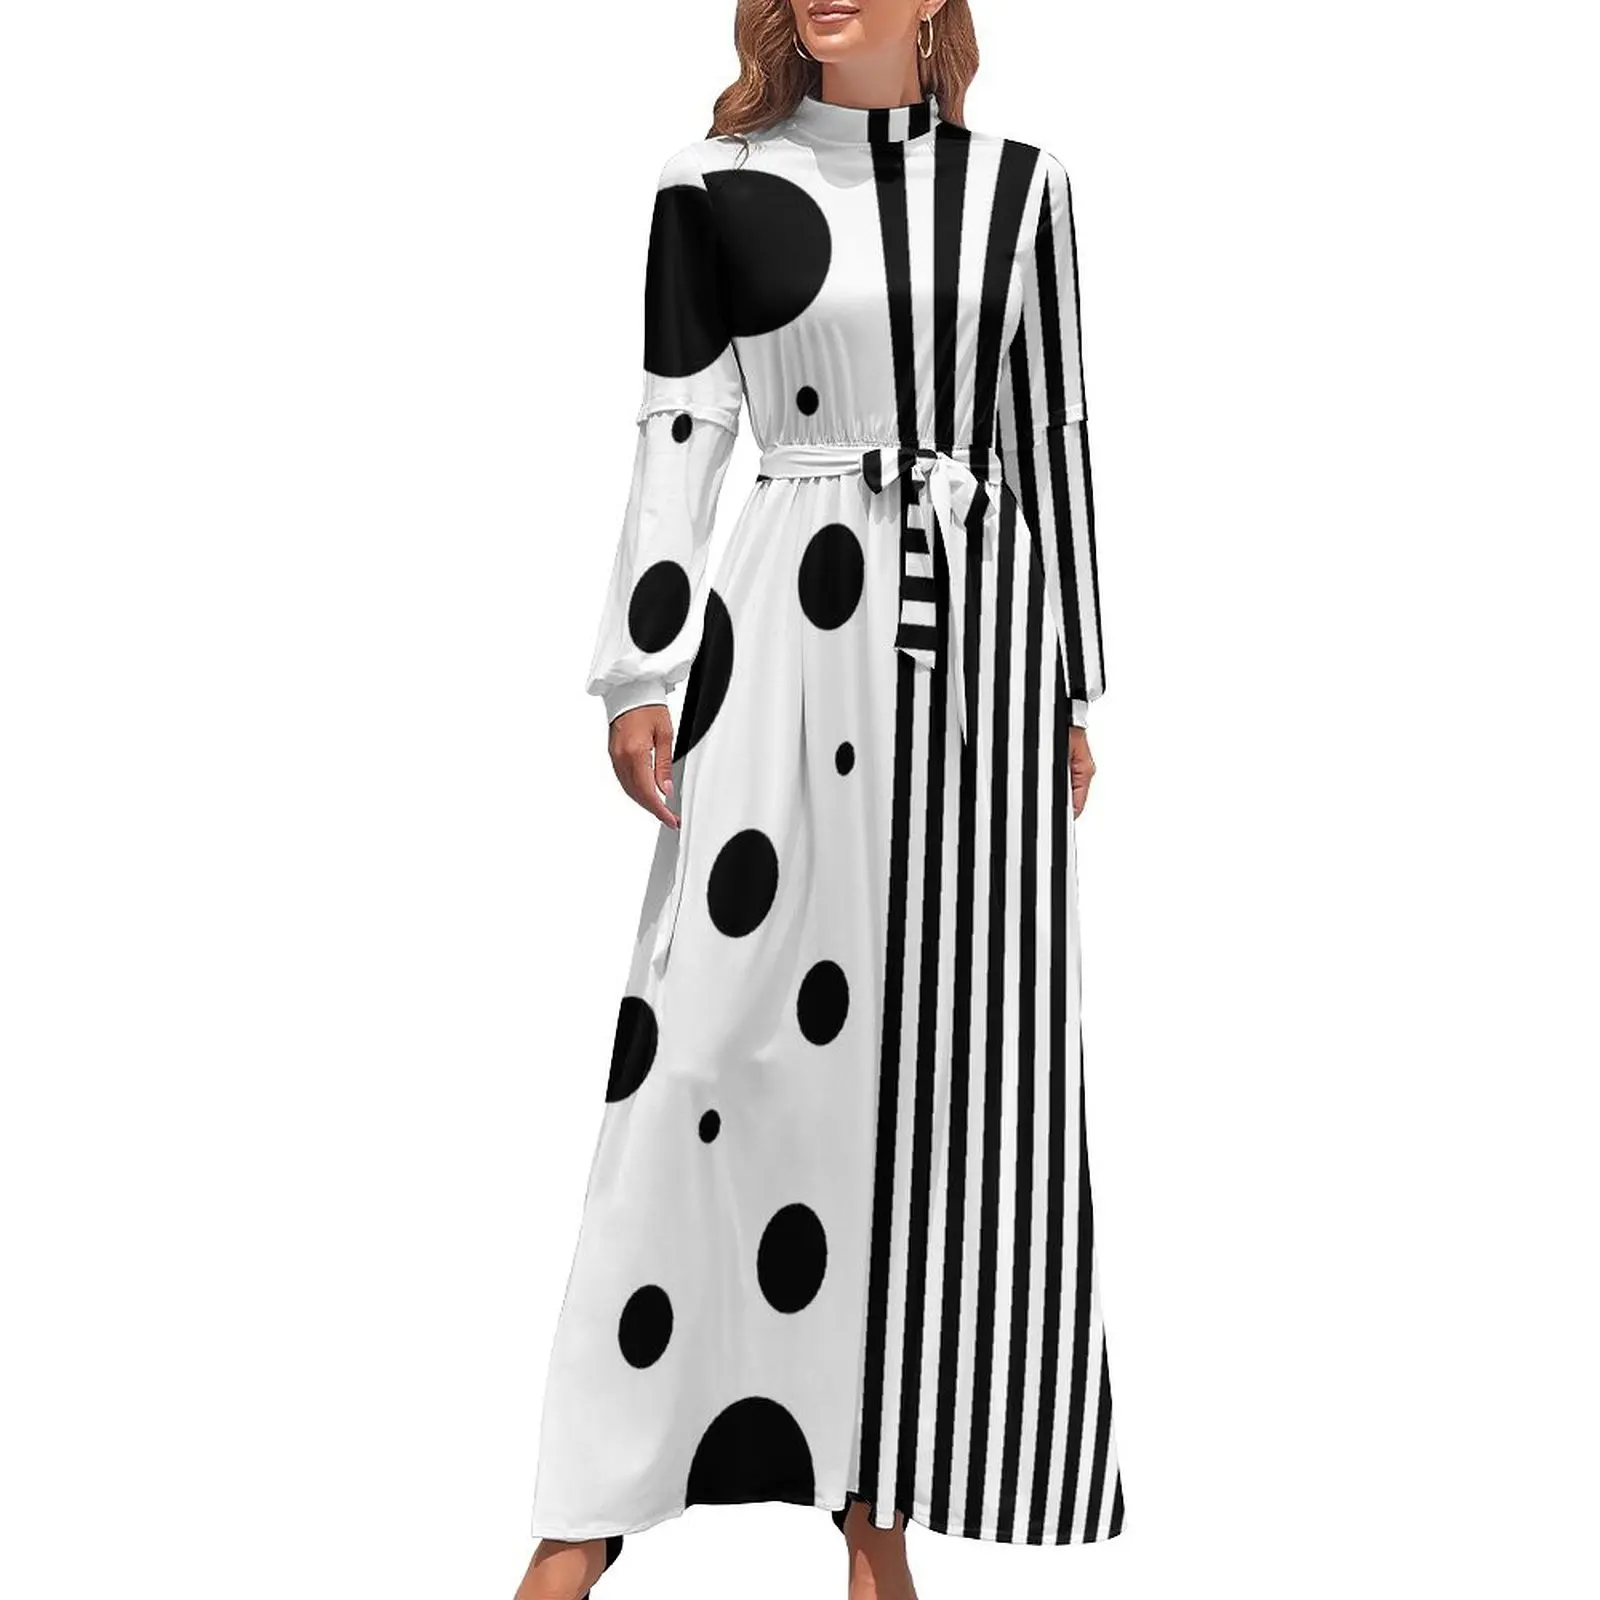 

Striped Polka Dot Dress Black and White Two Tone Street Style Bohemia Dresses Lady Long Sleeve High Waist Party Long Maxi Dress